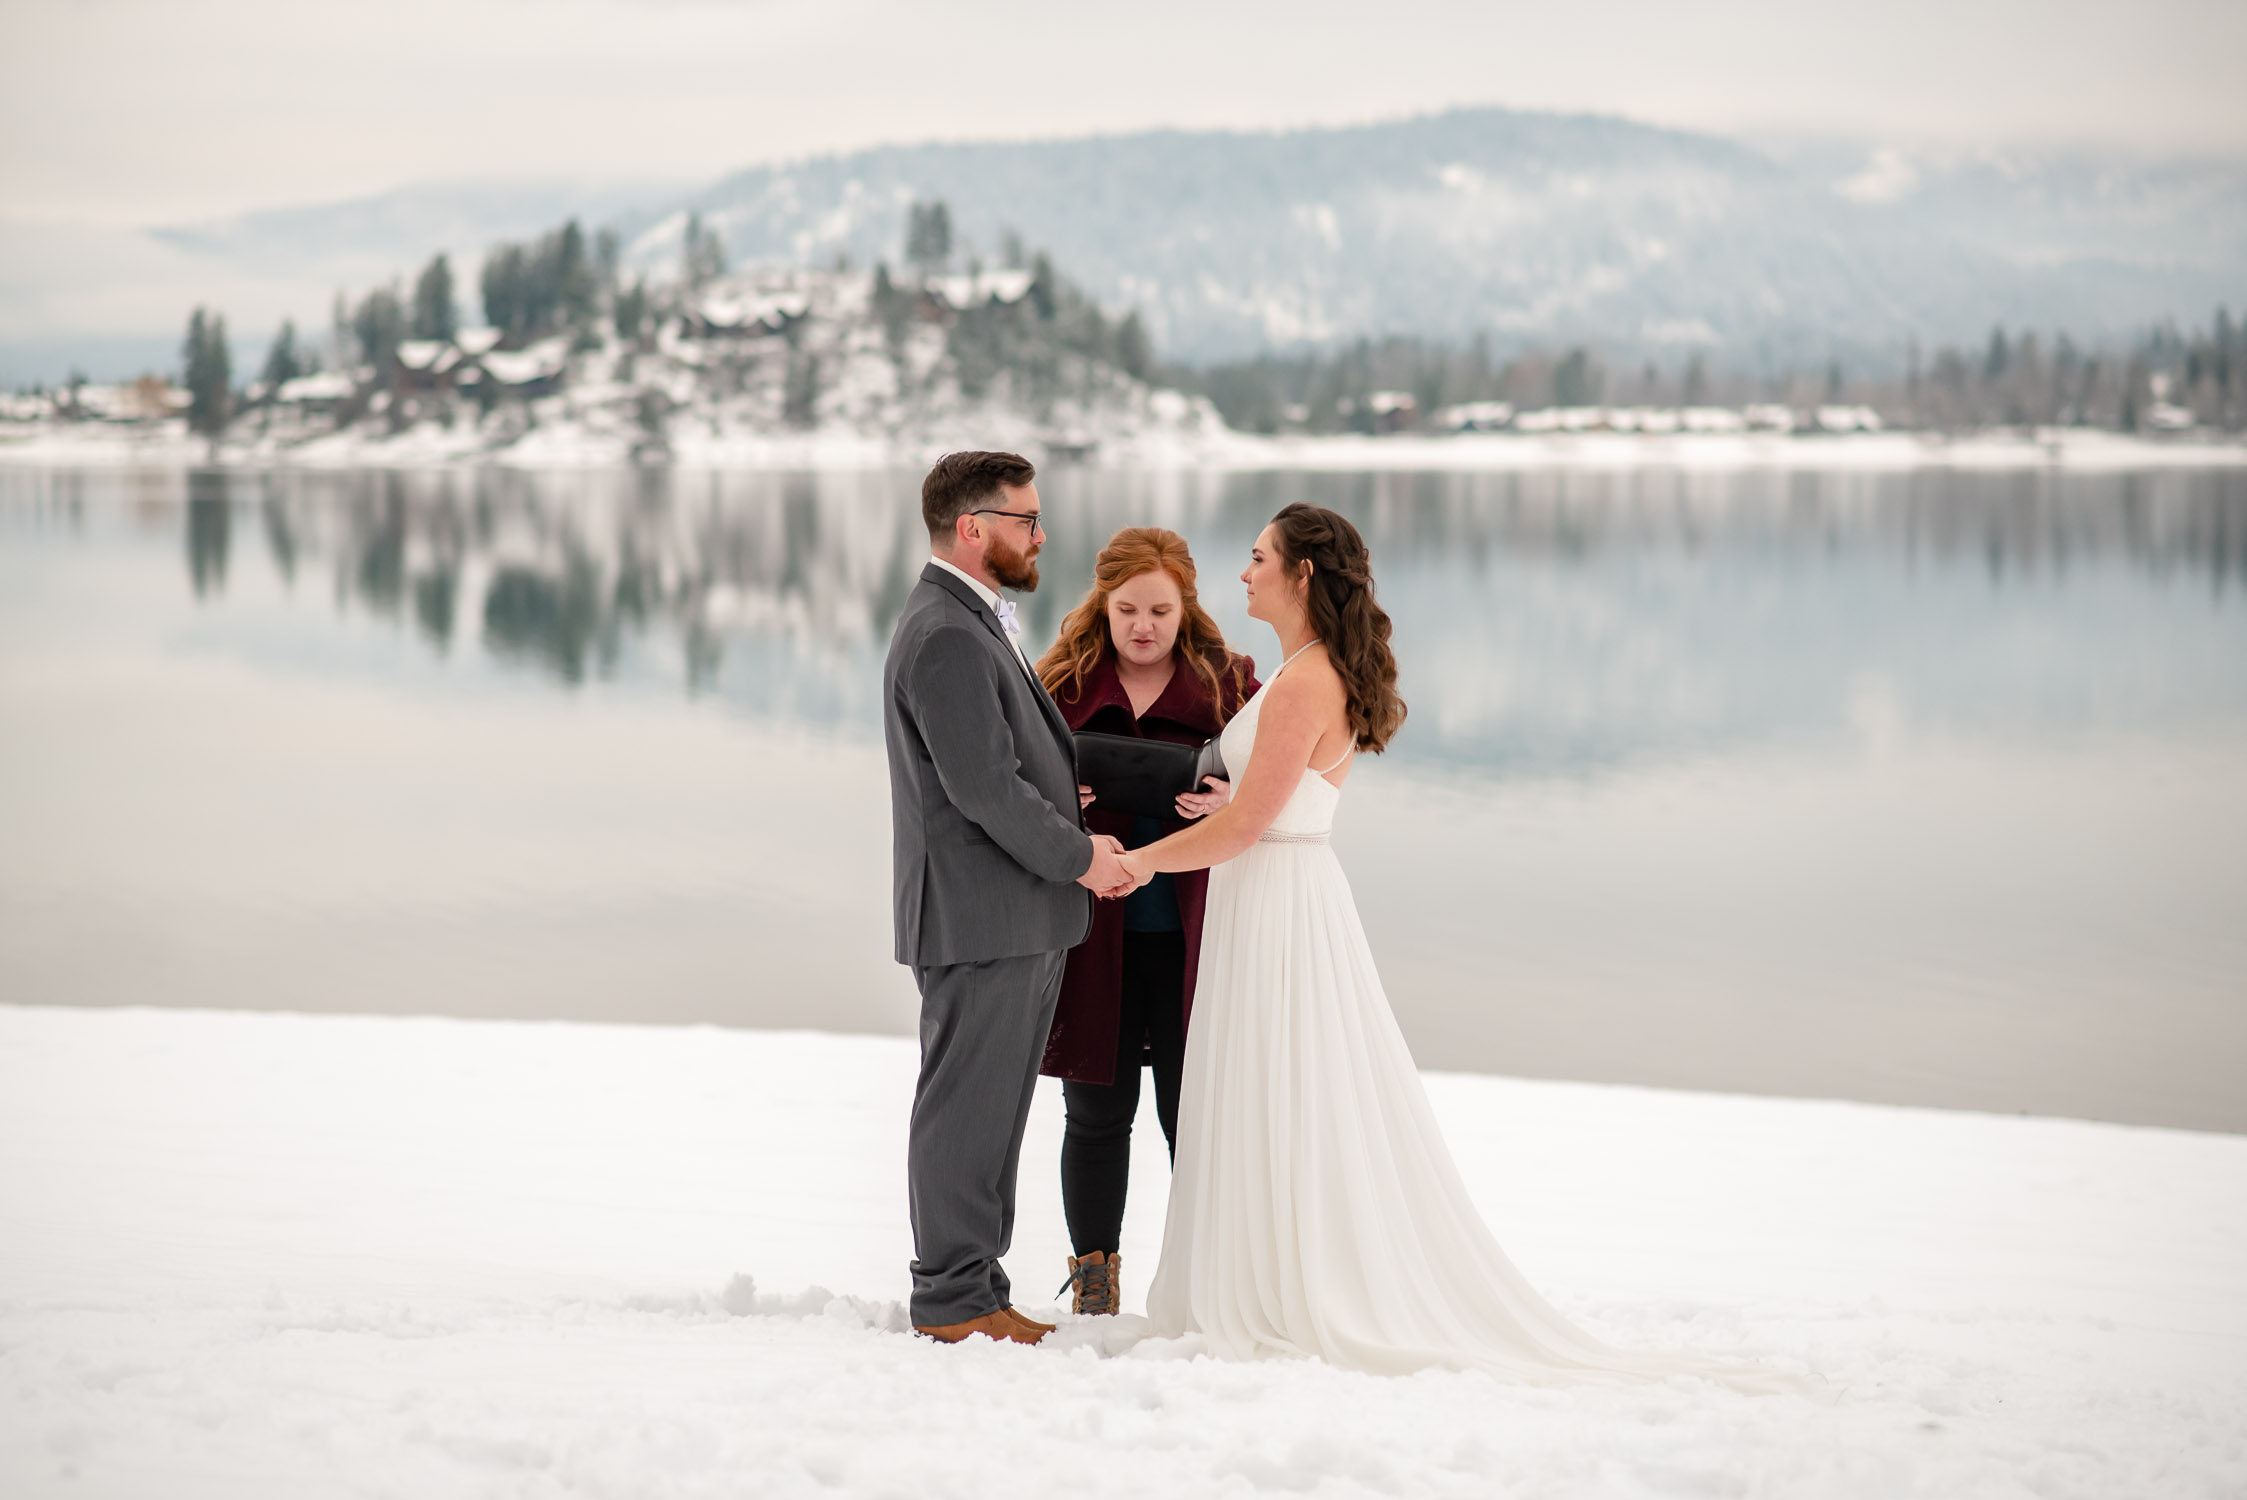 Winter elopement in North Idaho